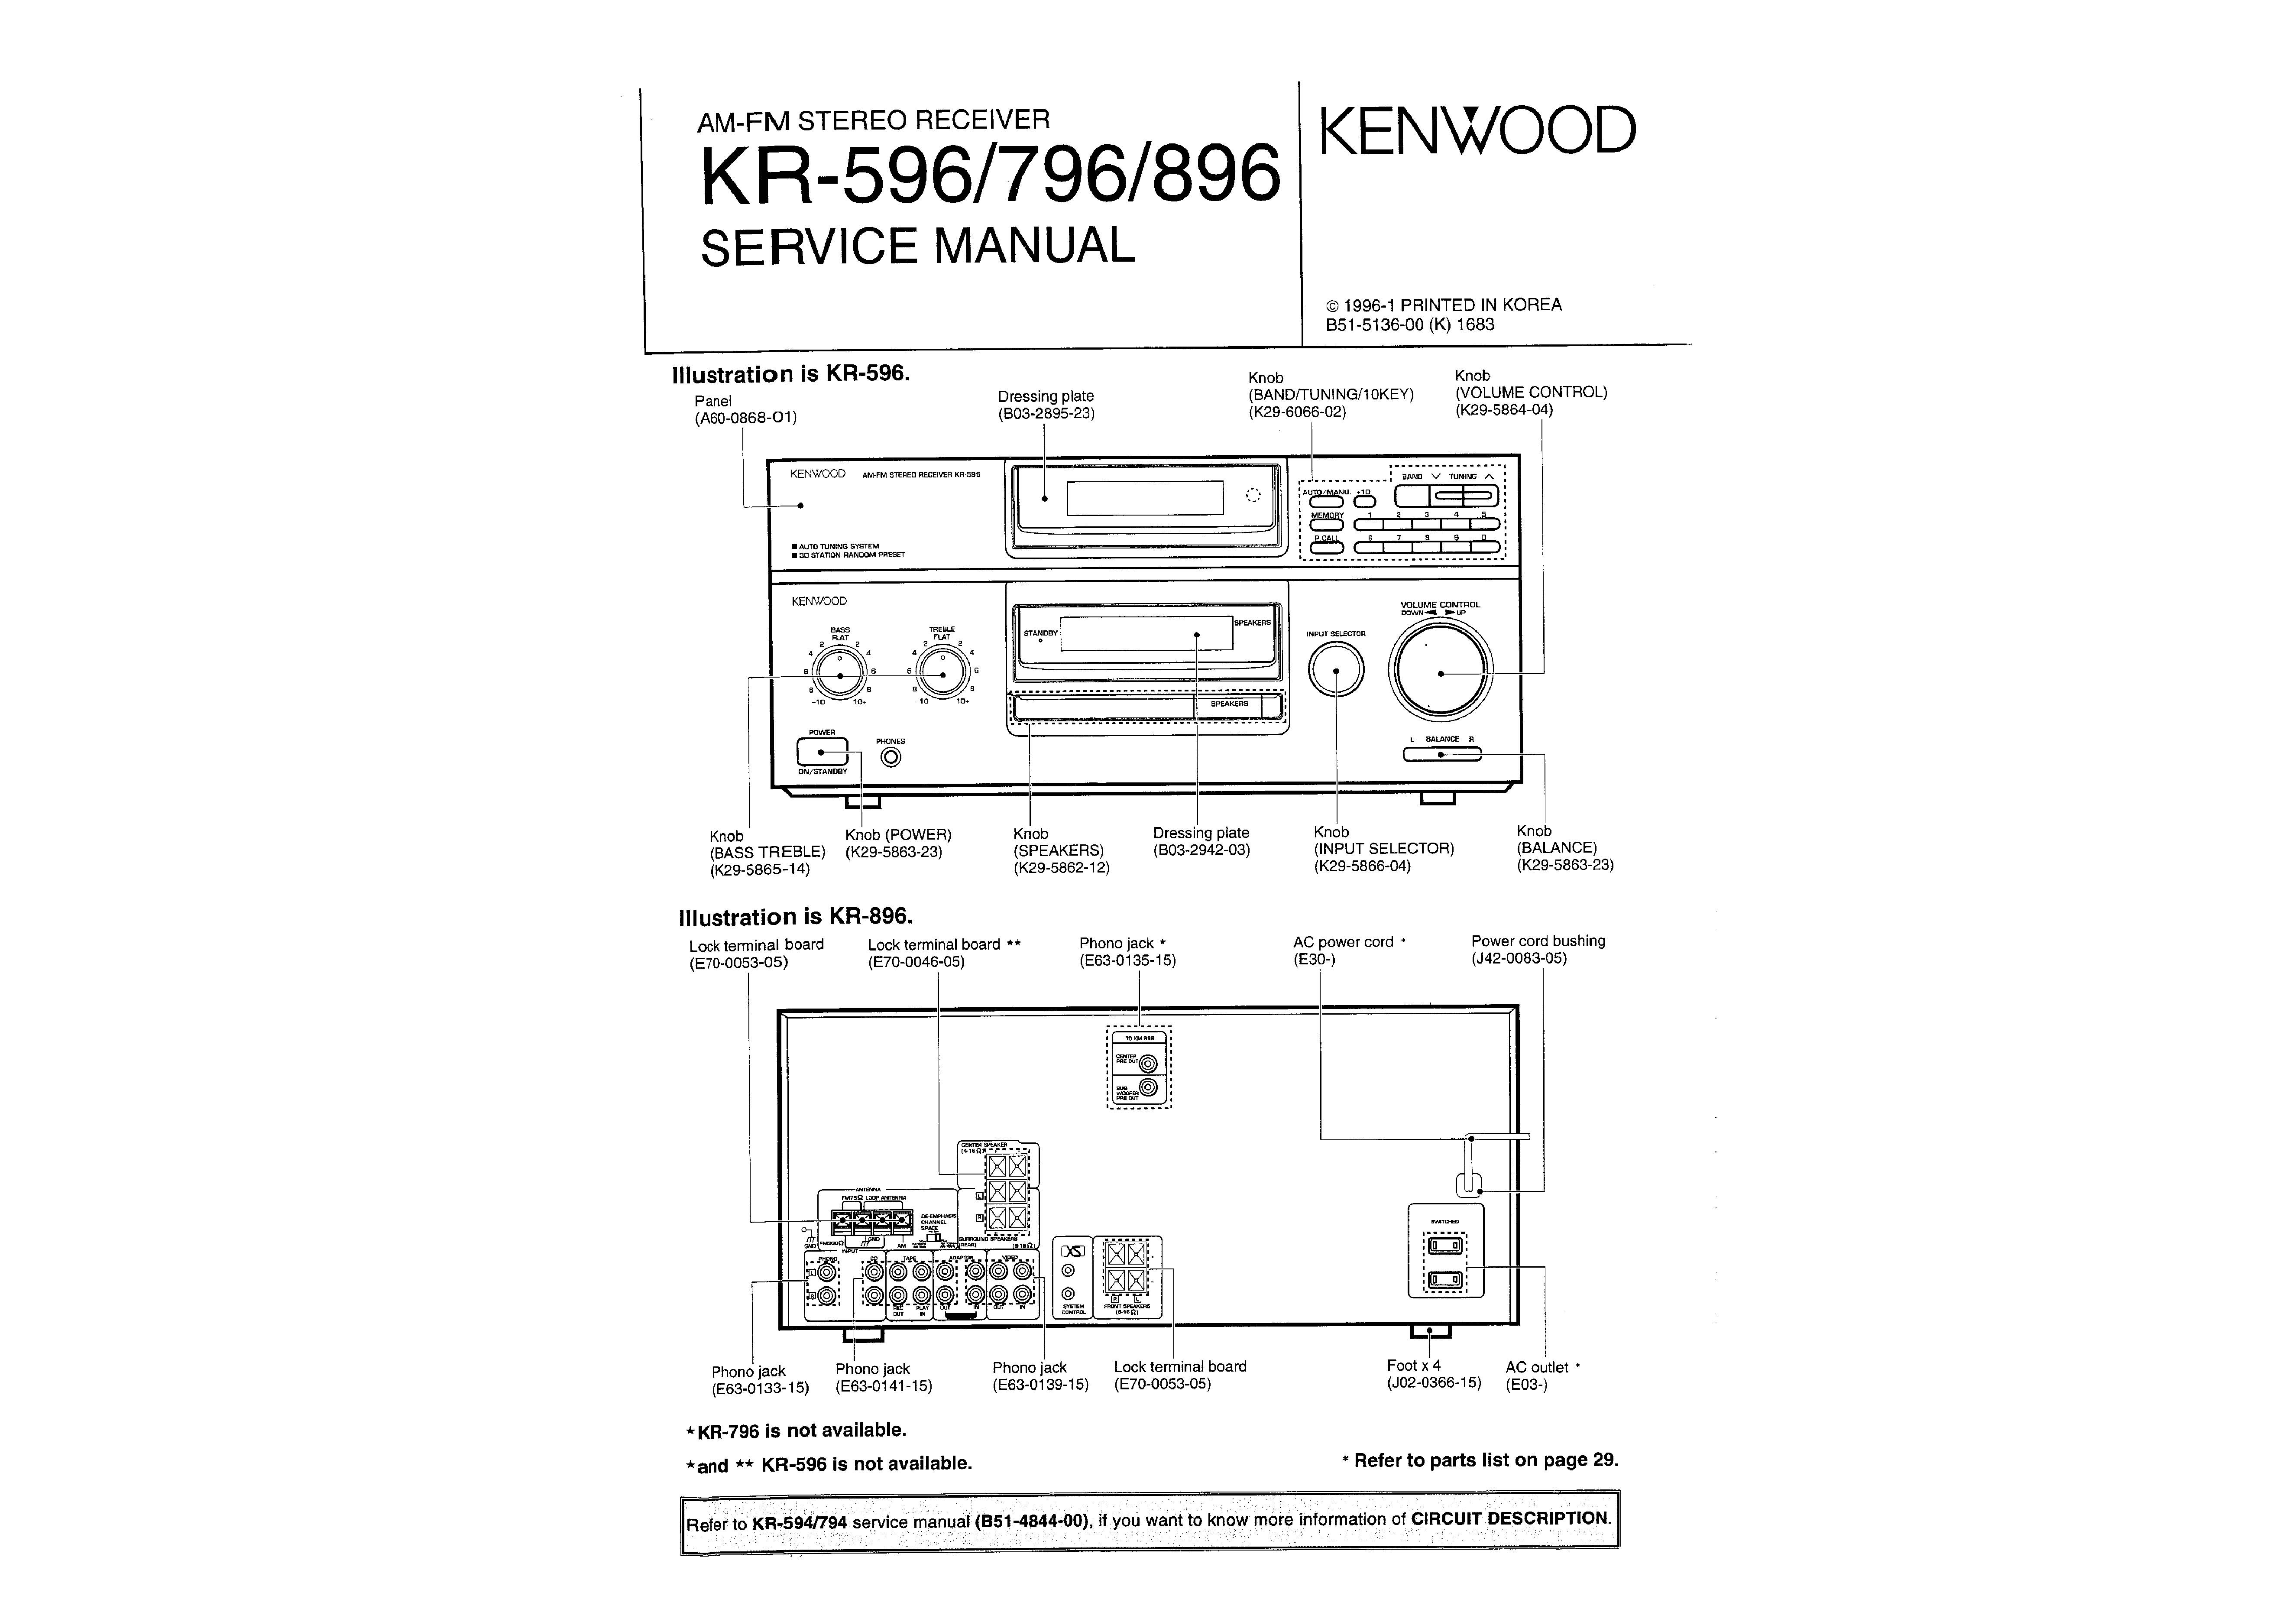 Kenwood KR-796